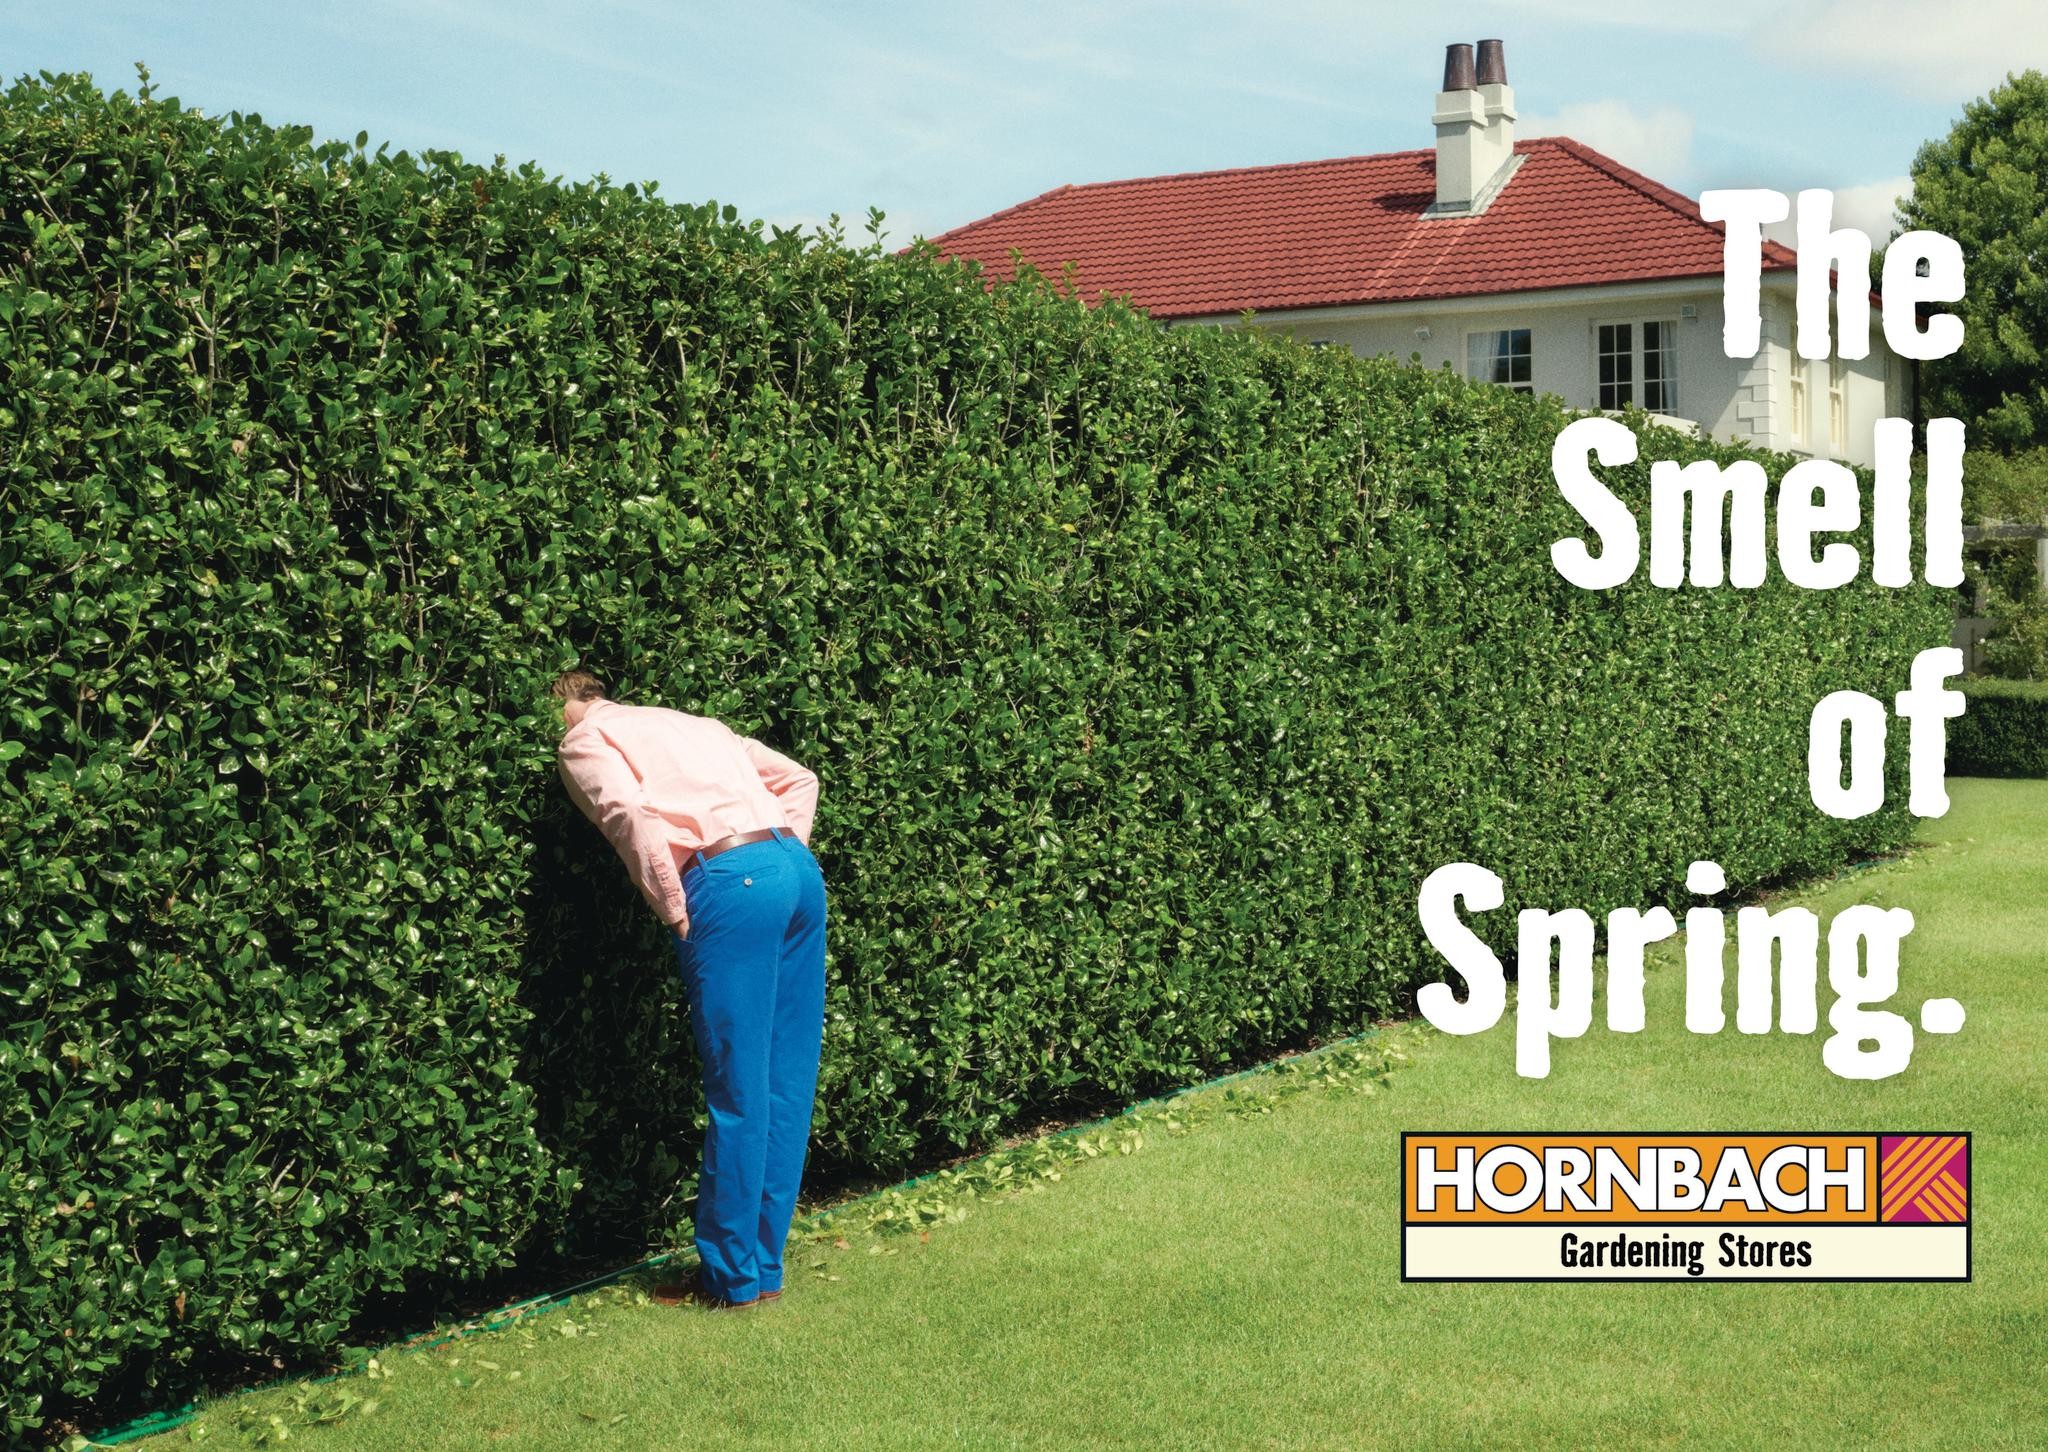 HORNBACH "Smell of Spring"